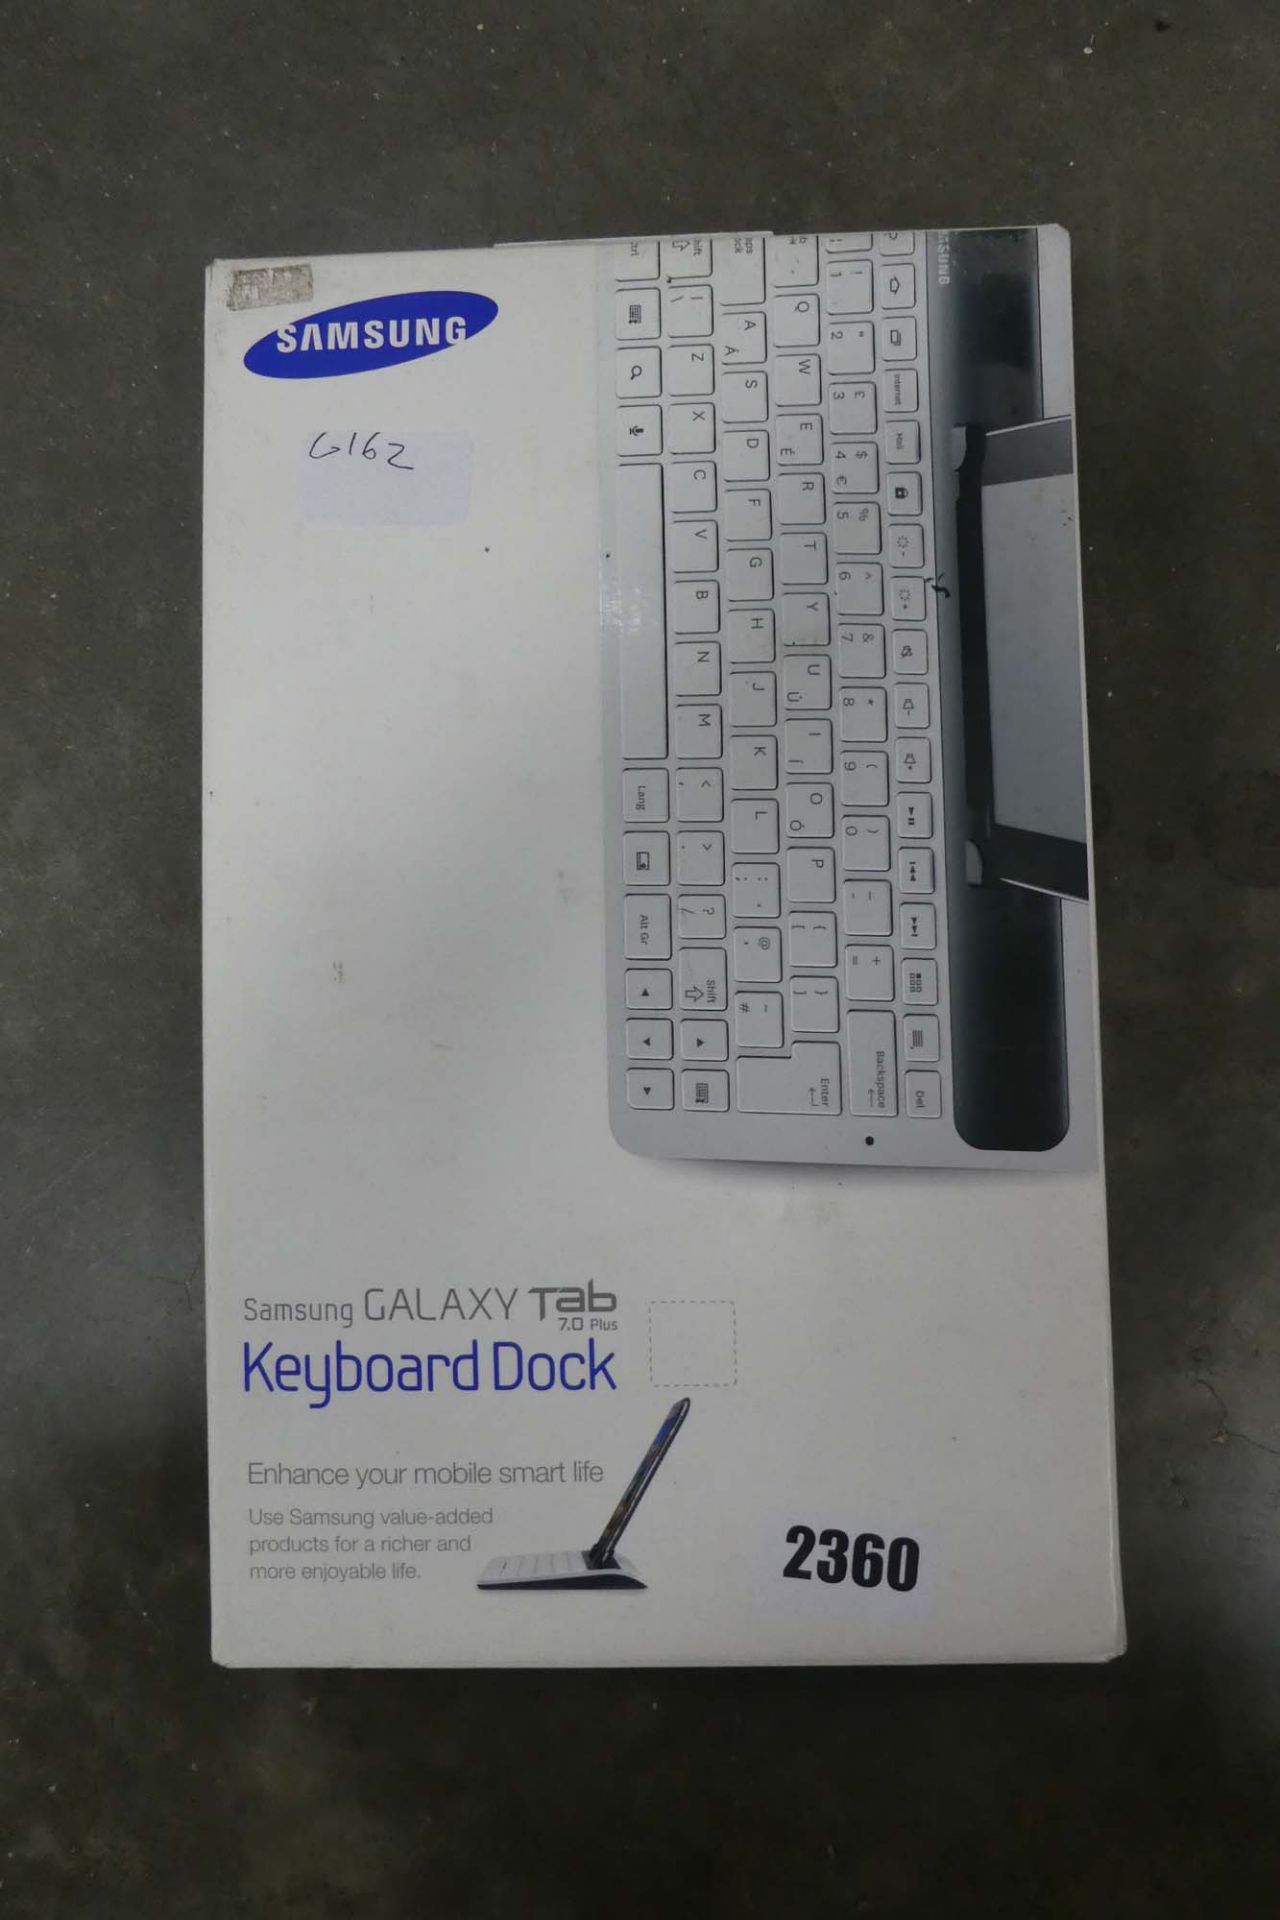 Samsung Galaxy Tab keyboard dock with box